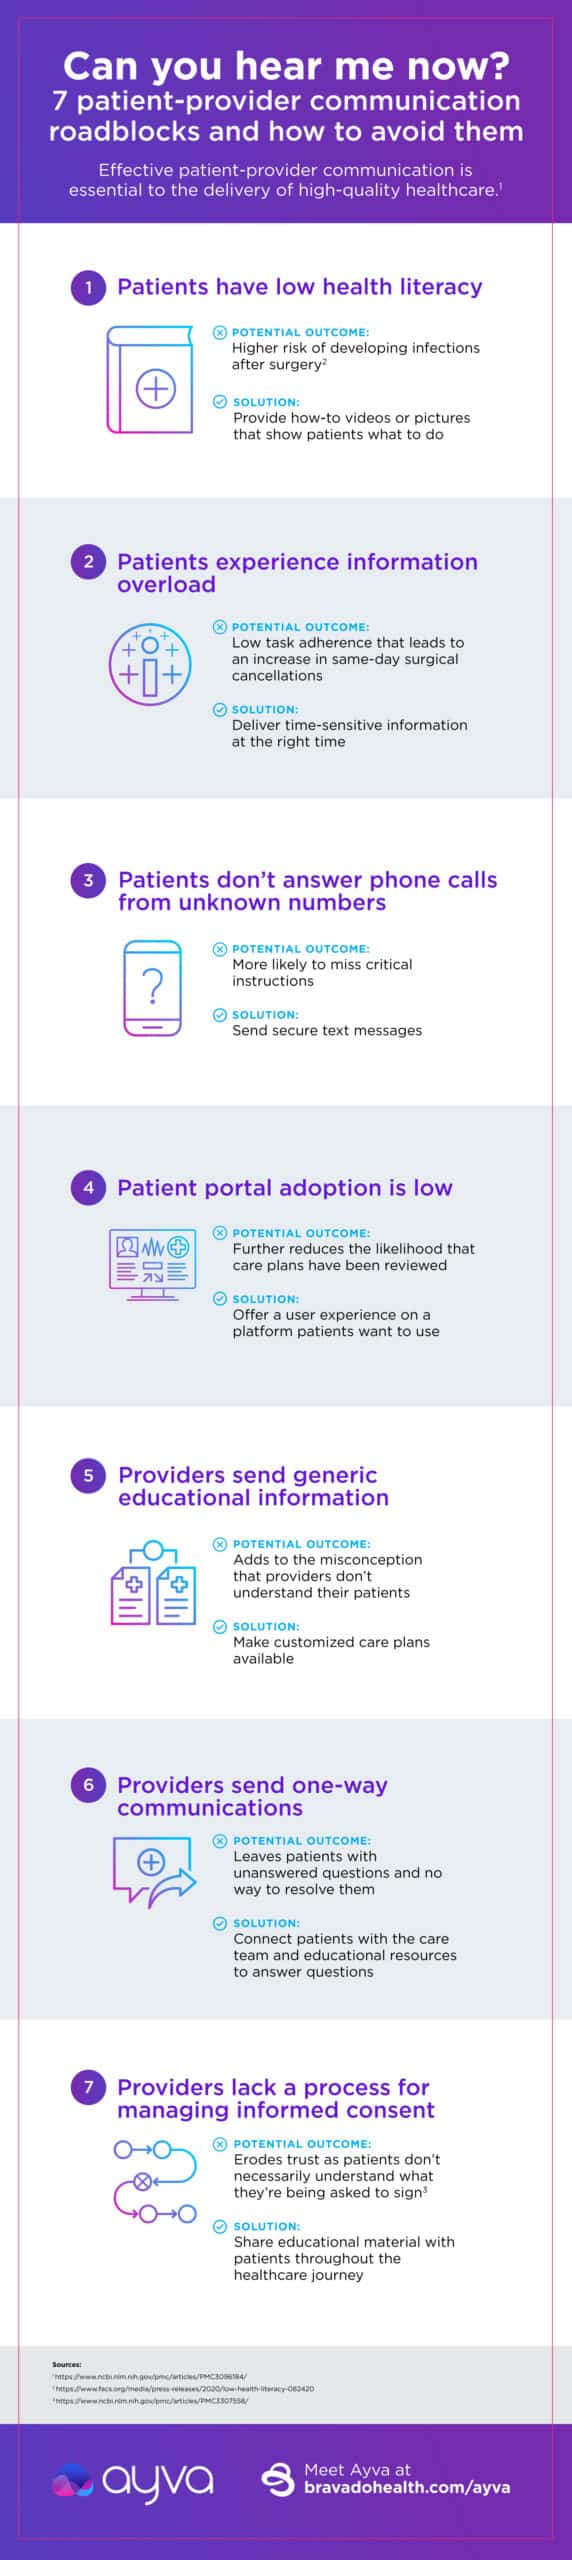 patient-provider communication roadblocks infographic for Bravado Health